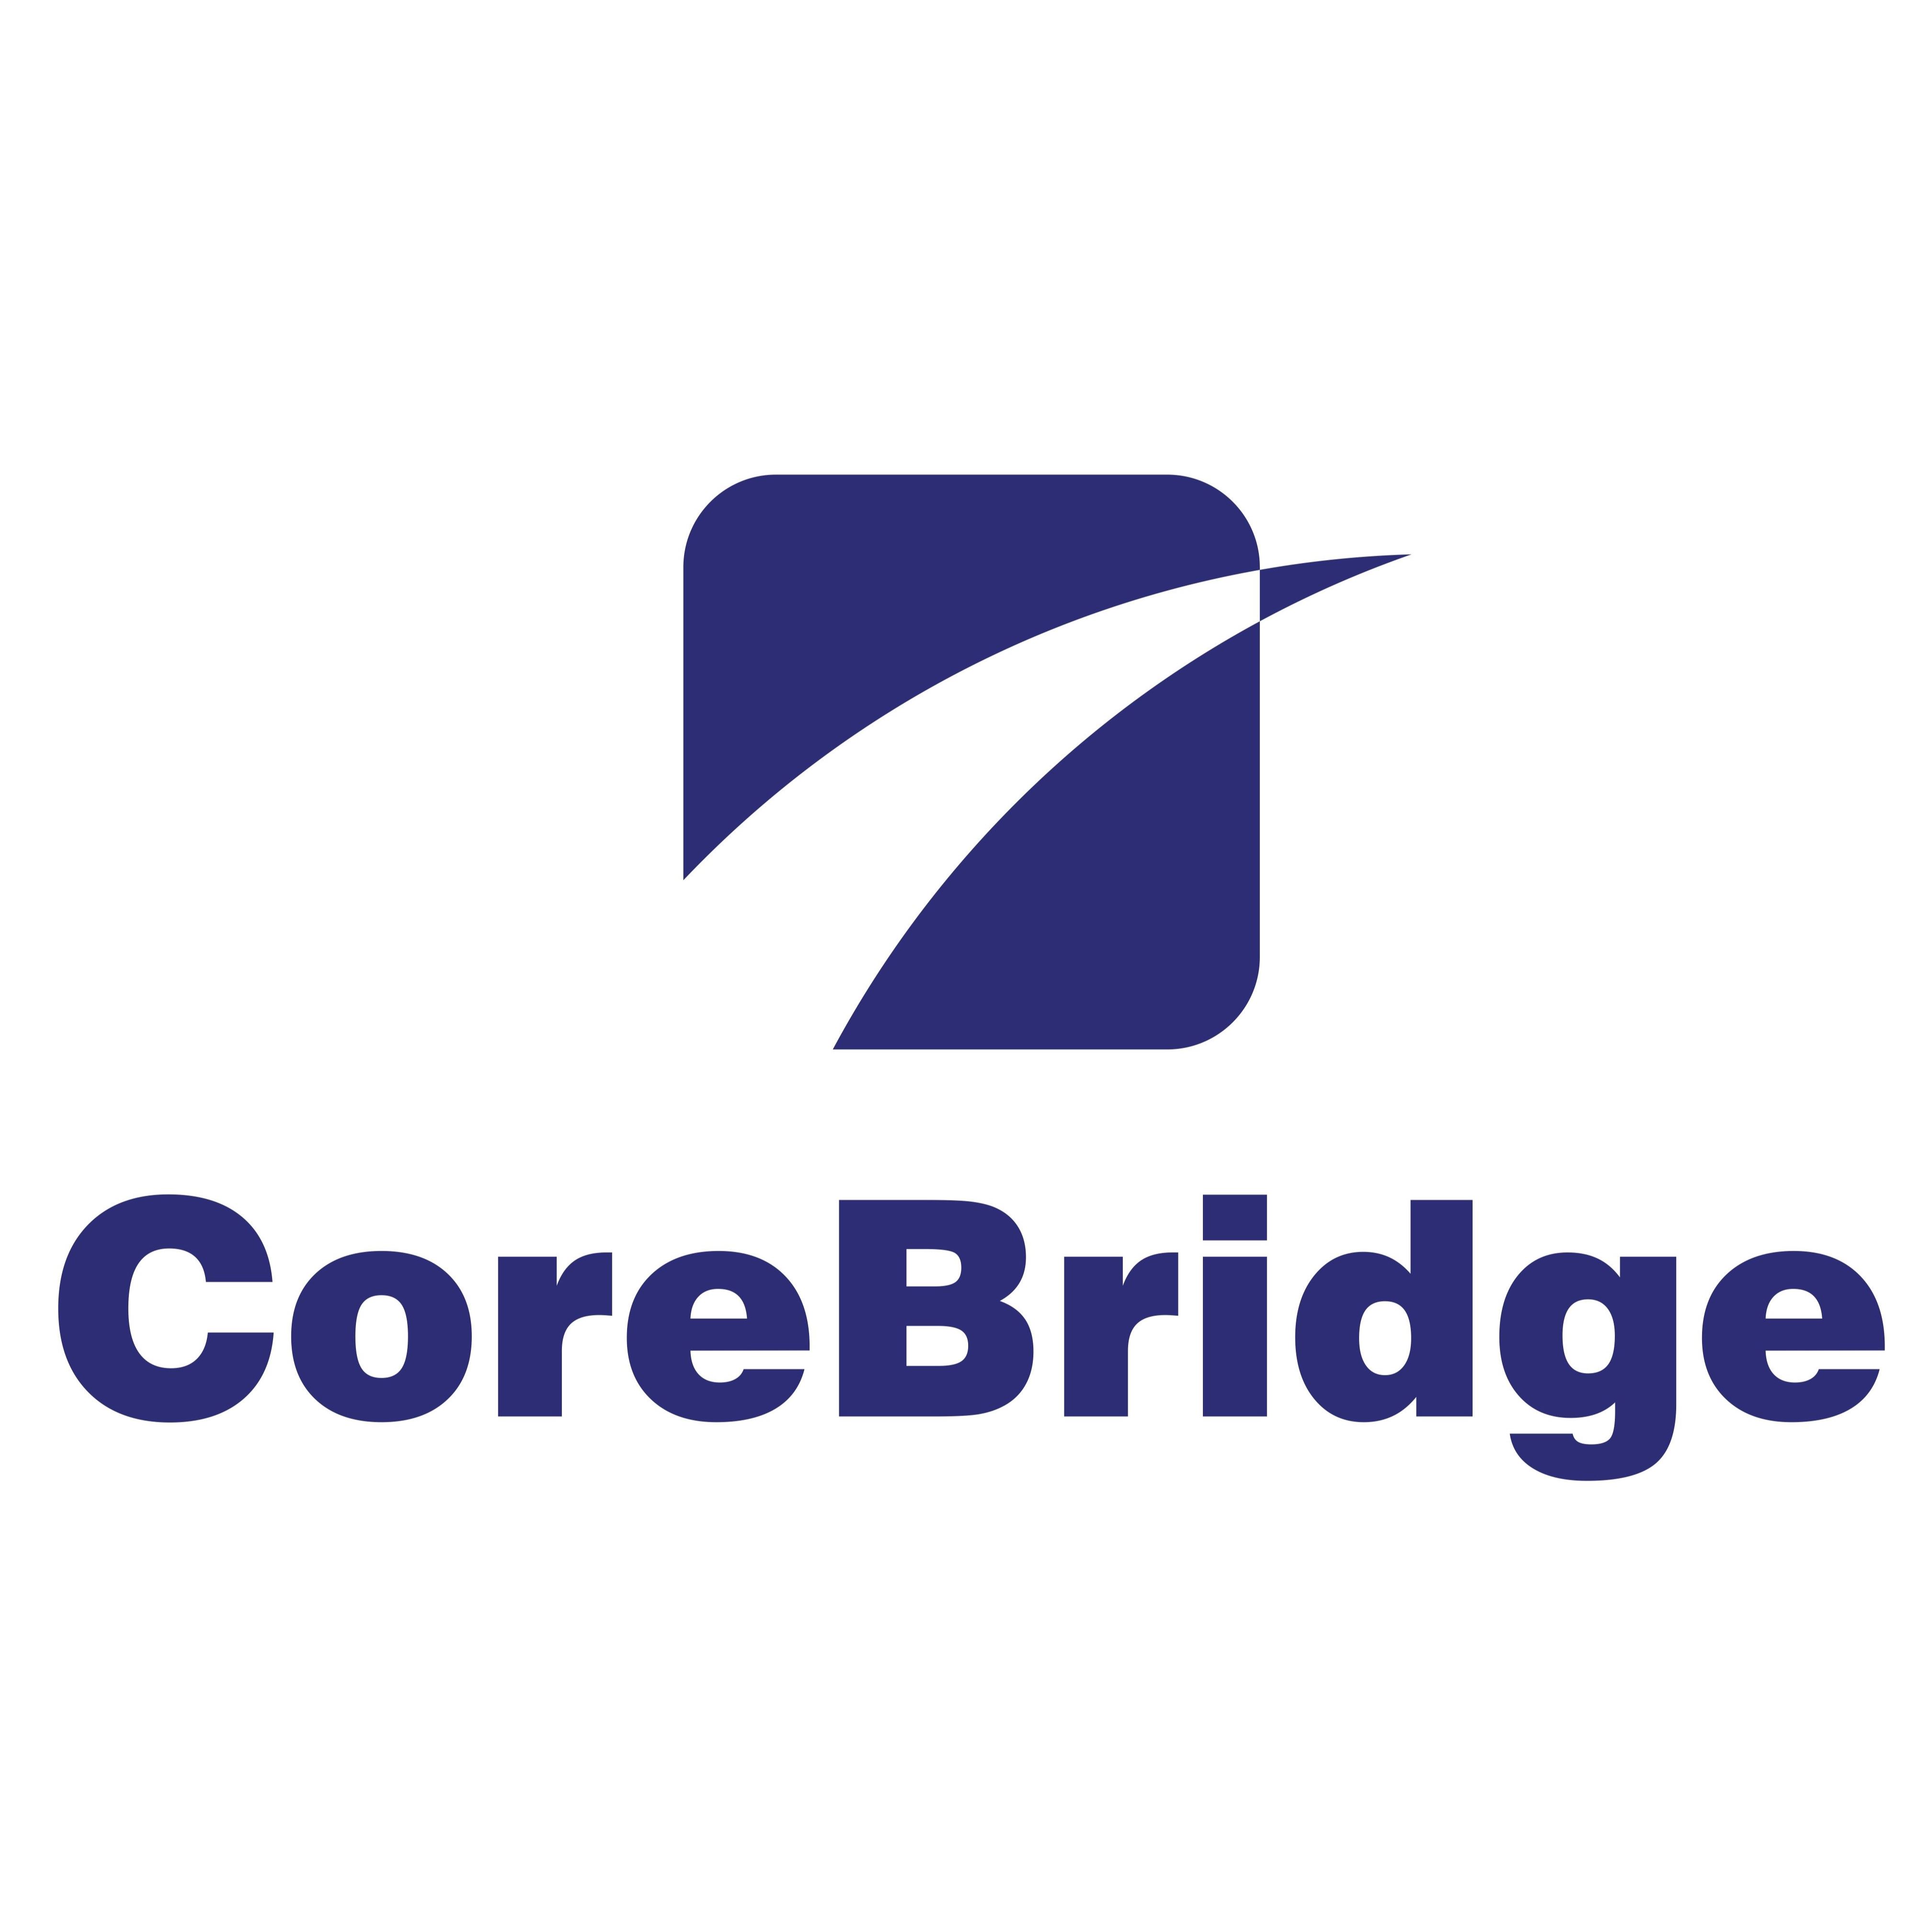 CoreBridge Company Limited